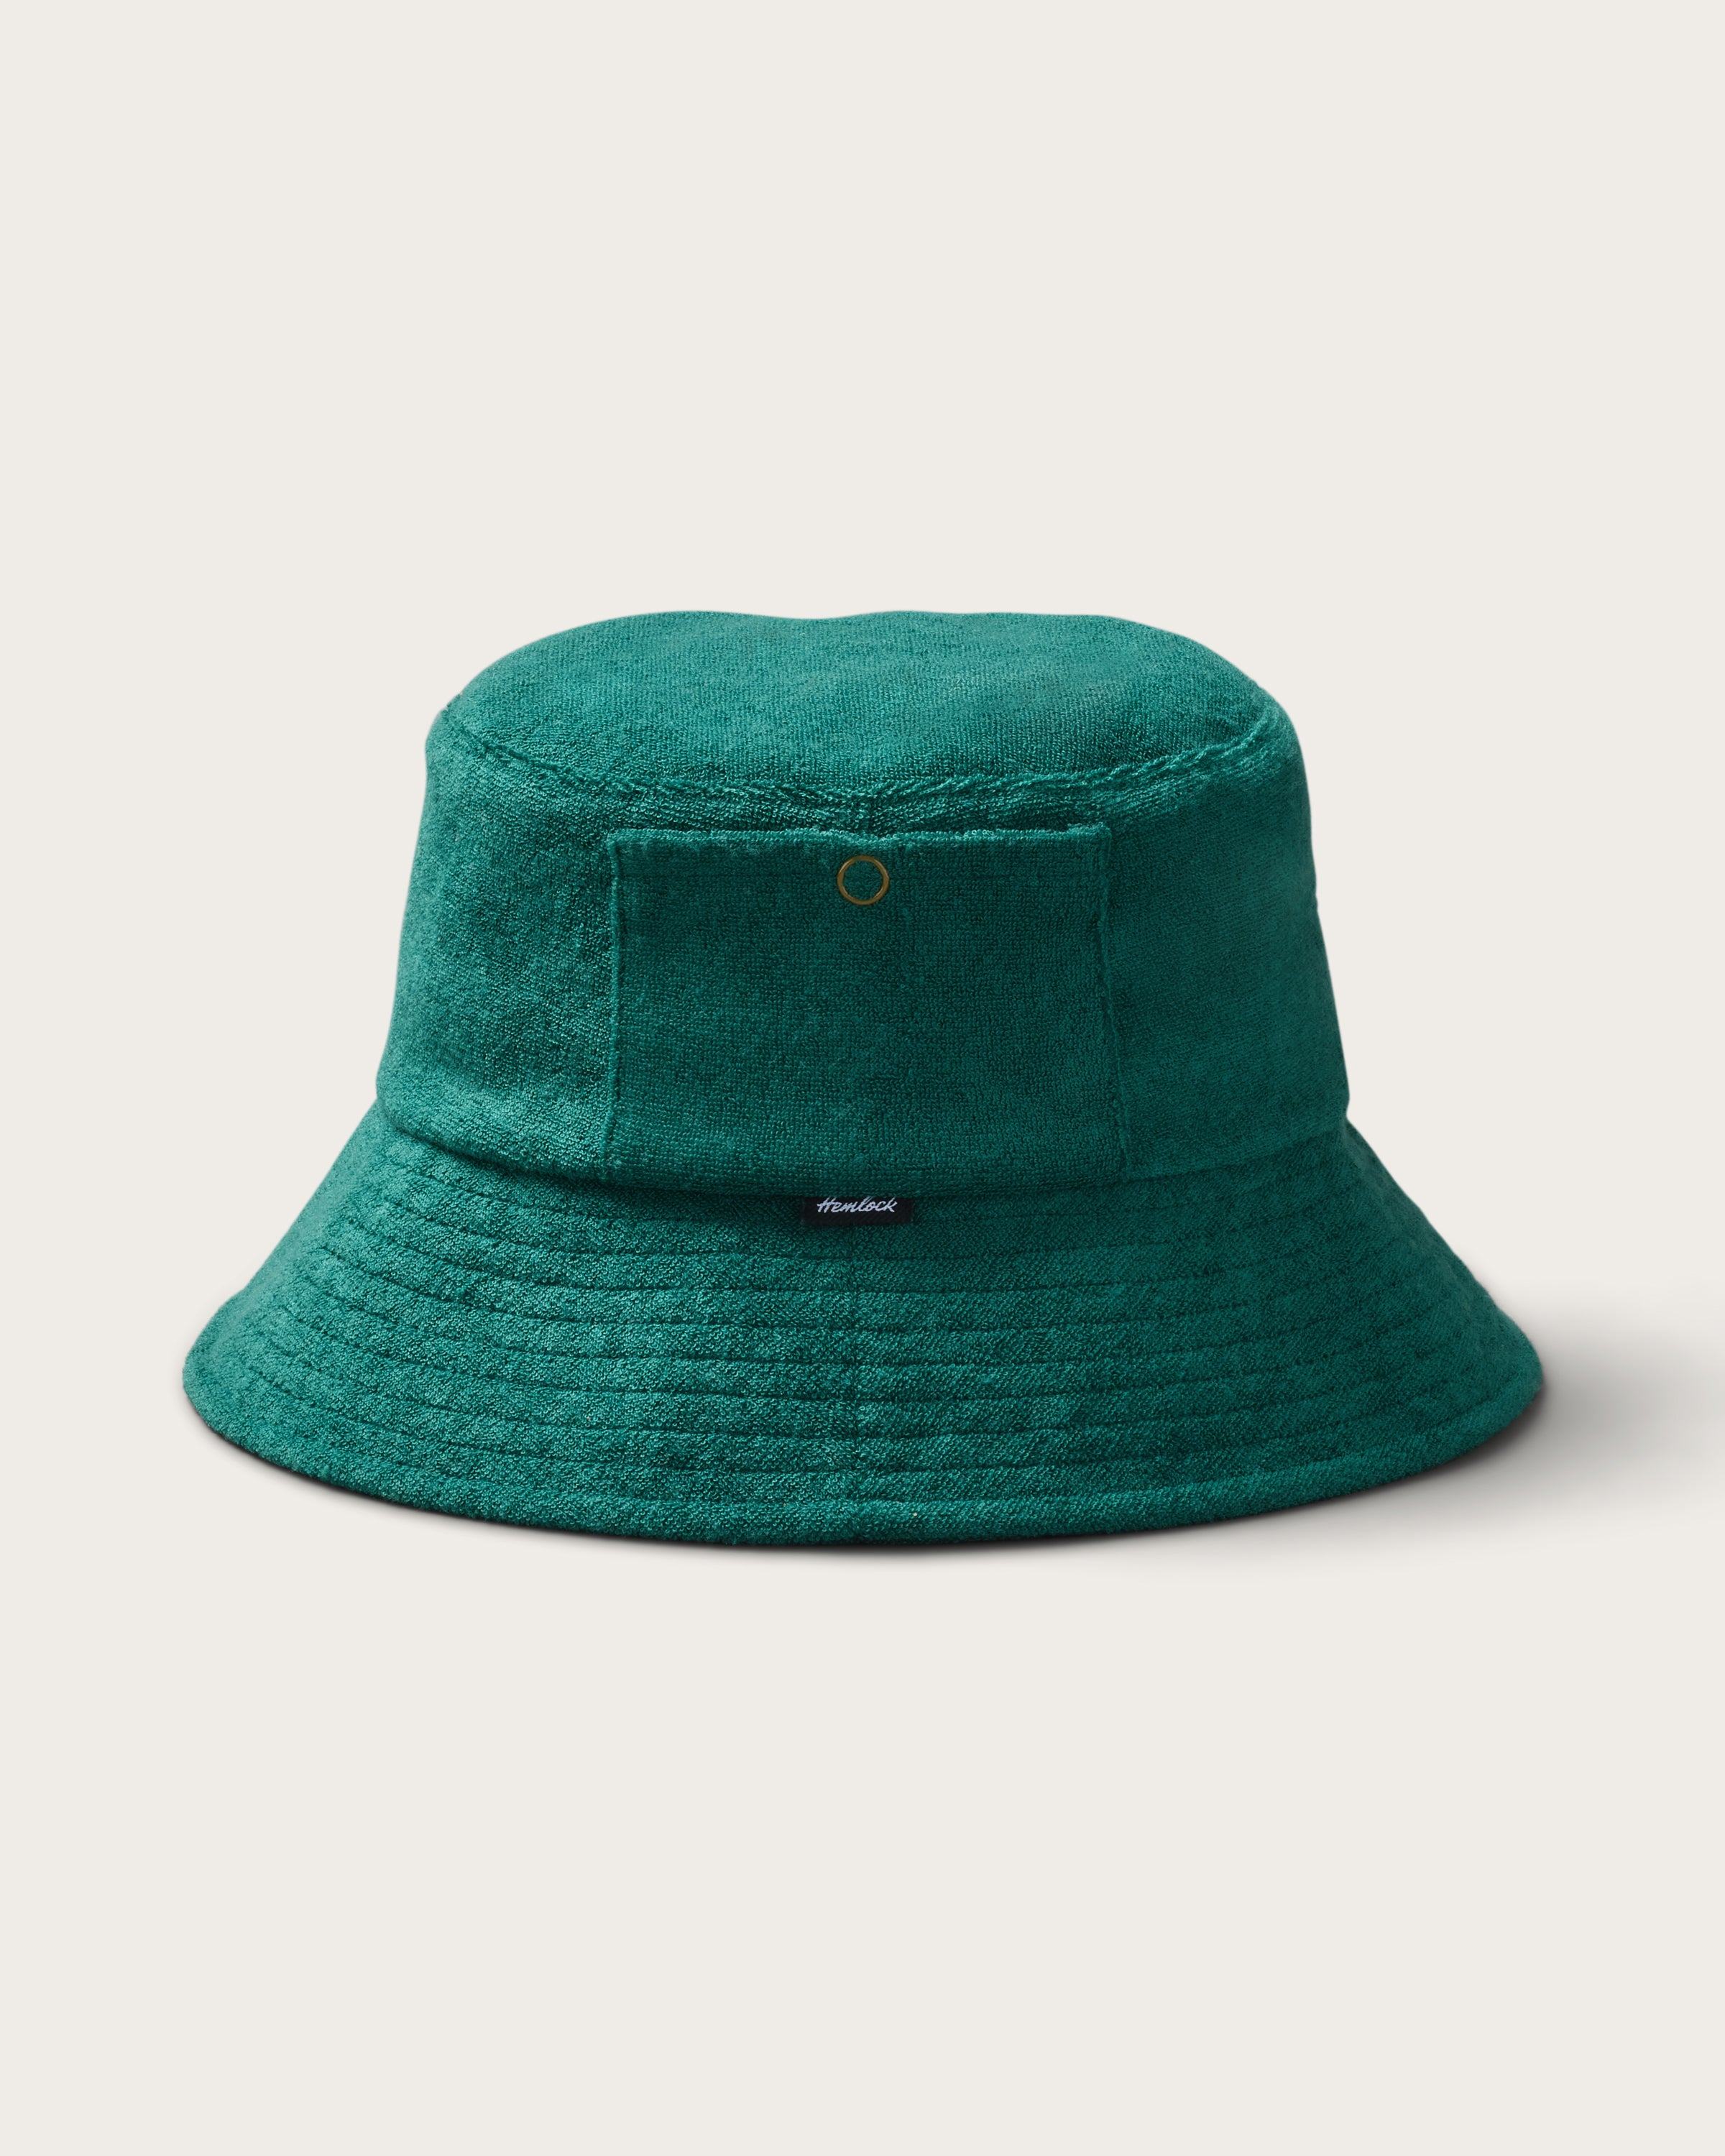 Marina Bucket in Emerald – Hemlock Hat Co.